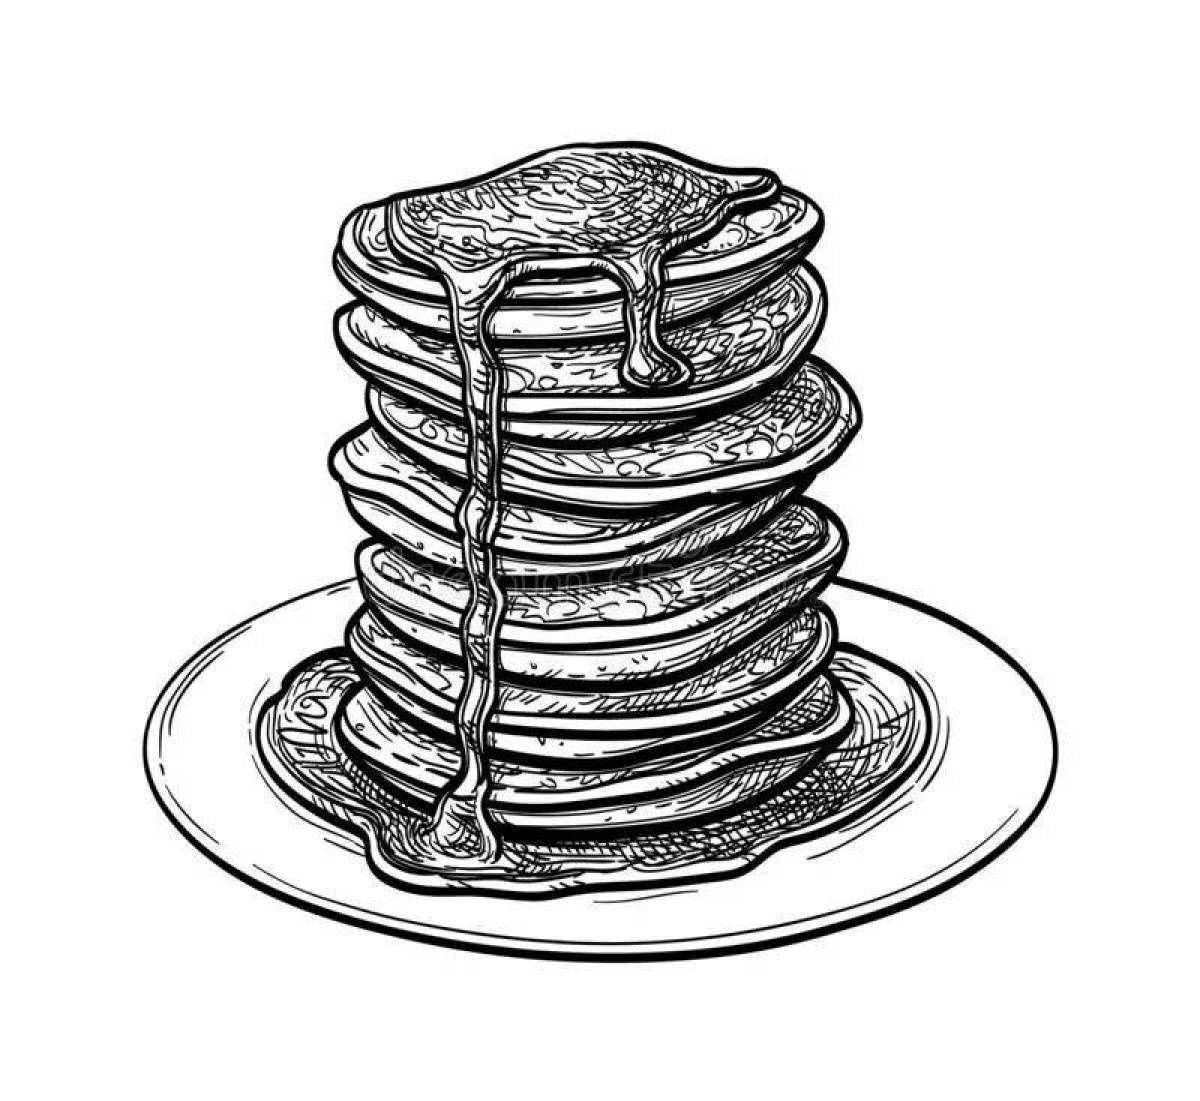 Coloring page tempting pancakes